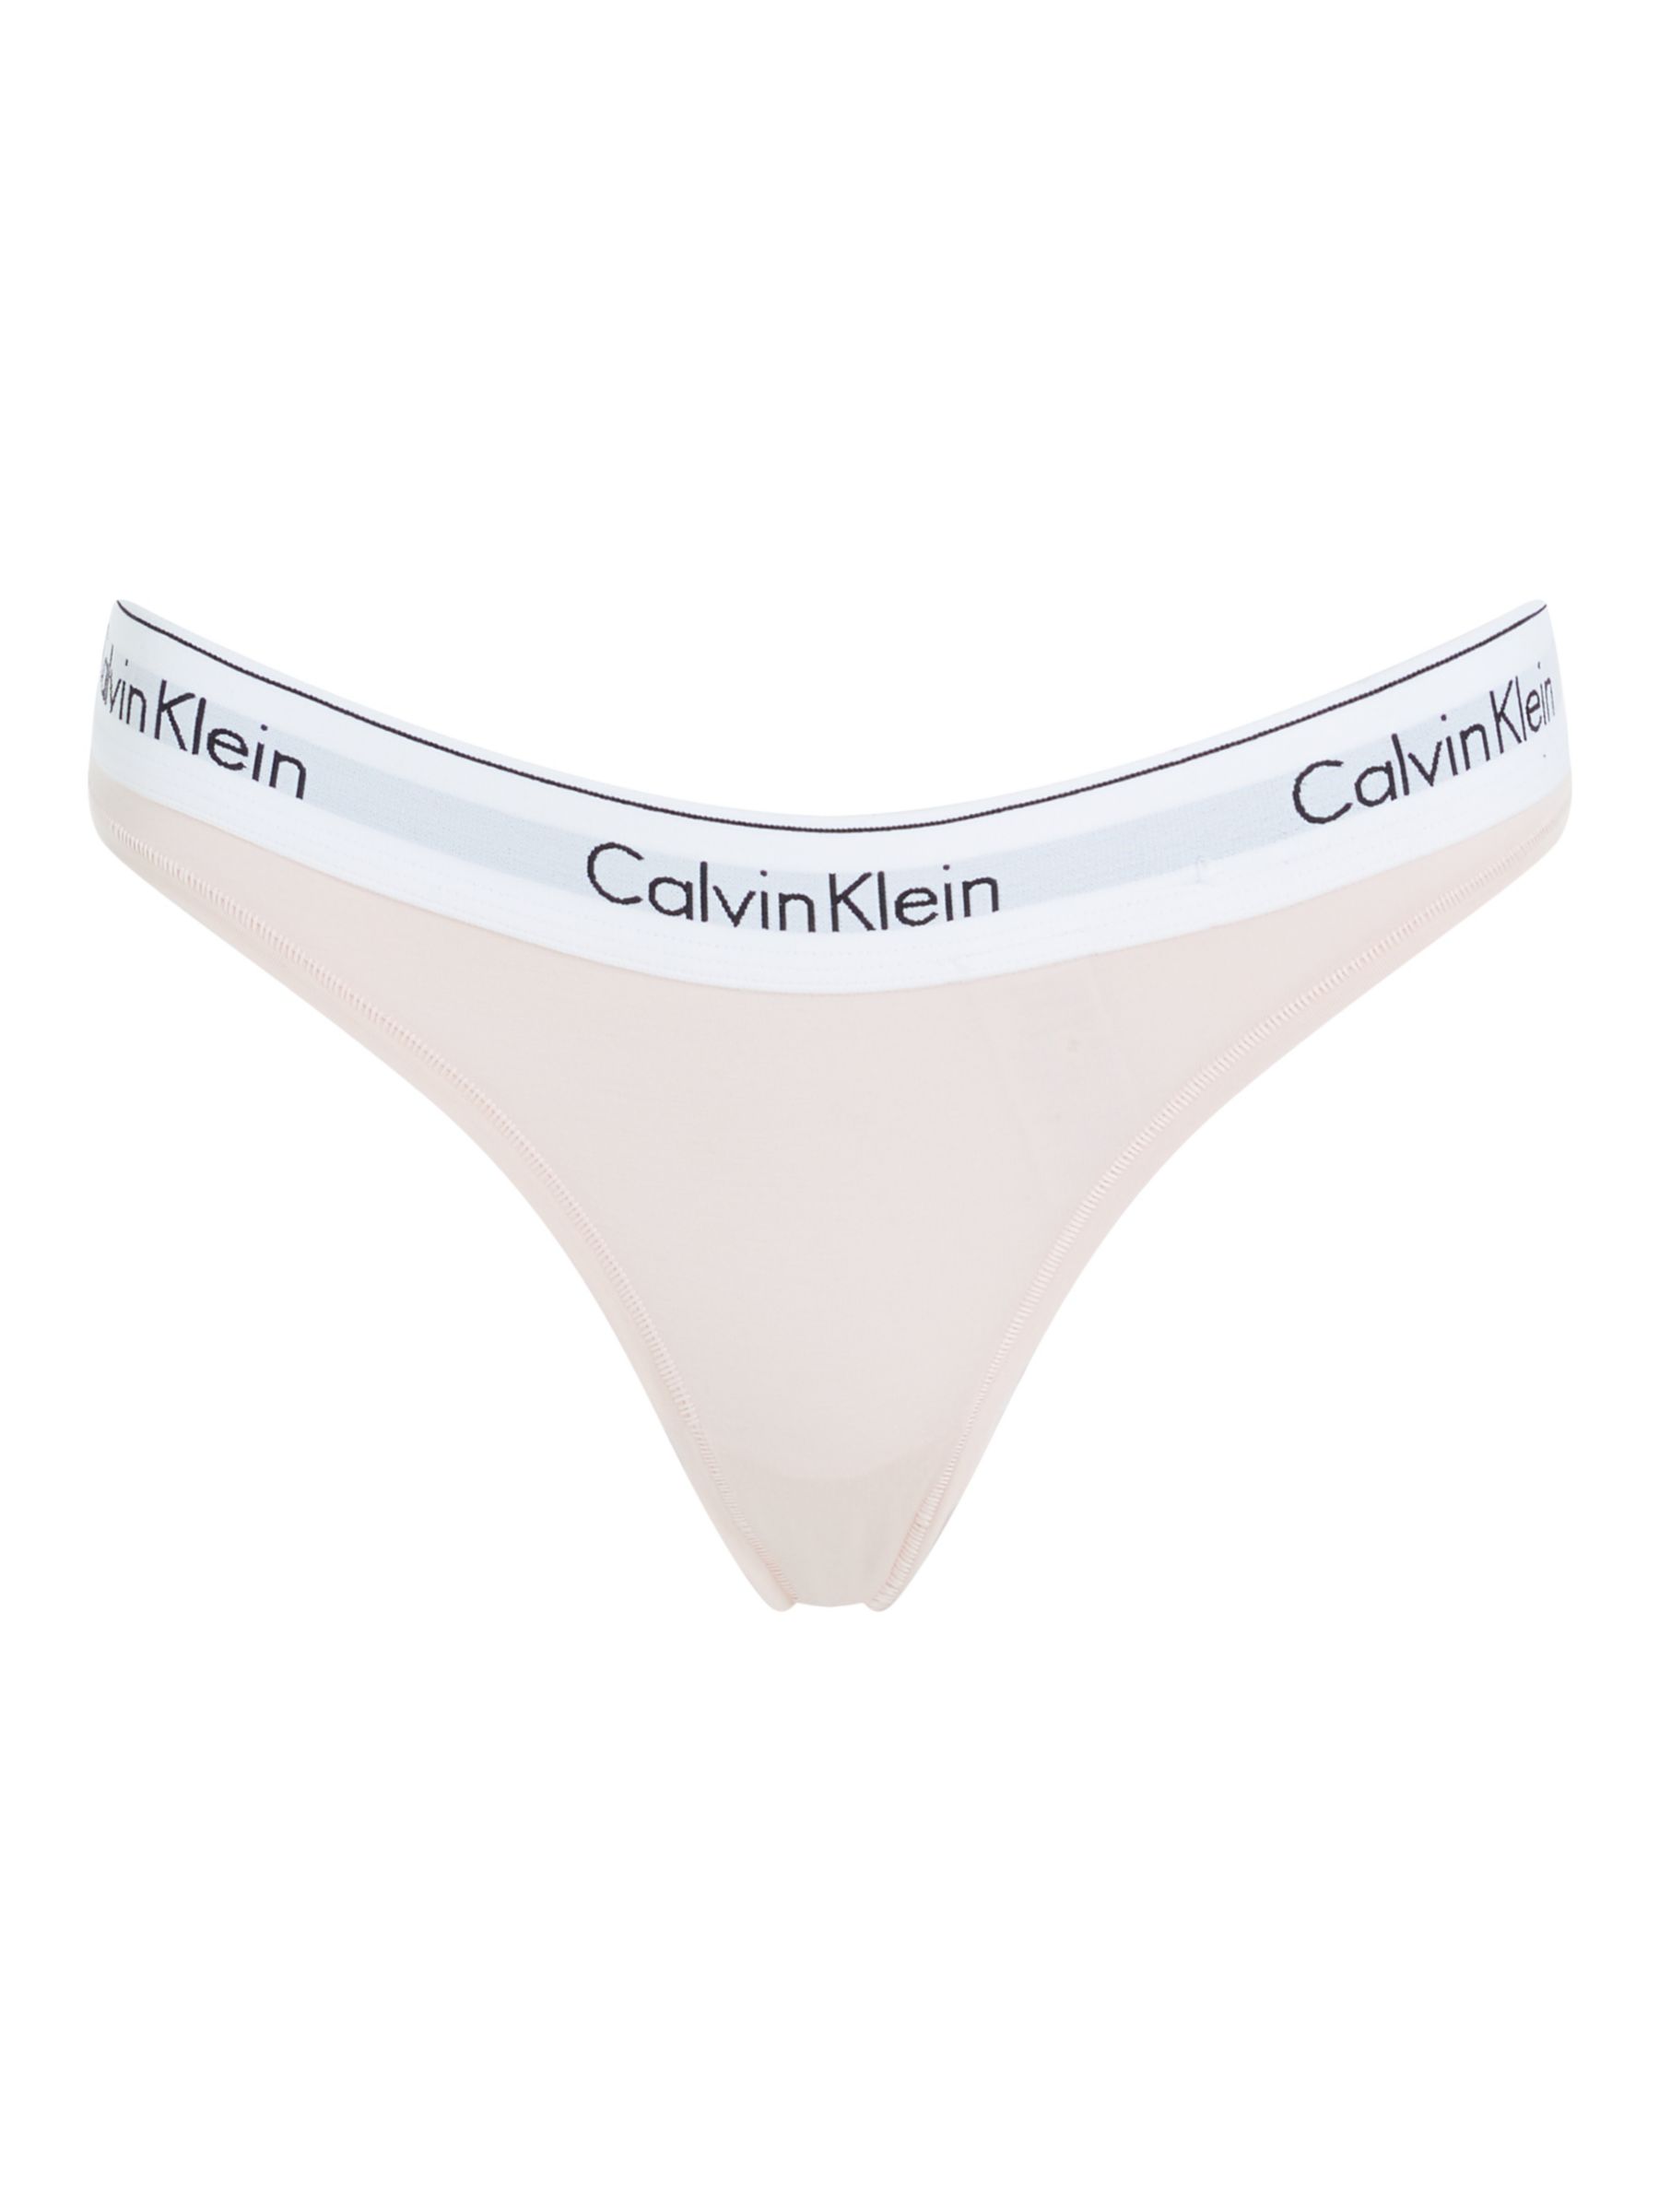 Calvin Klein Modern Cotton Bikini Knickers, Nymphs Thigh at John